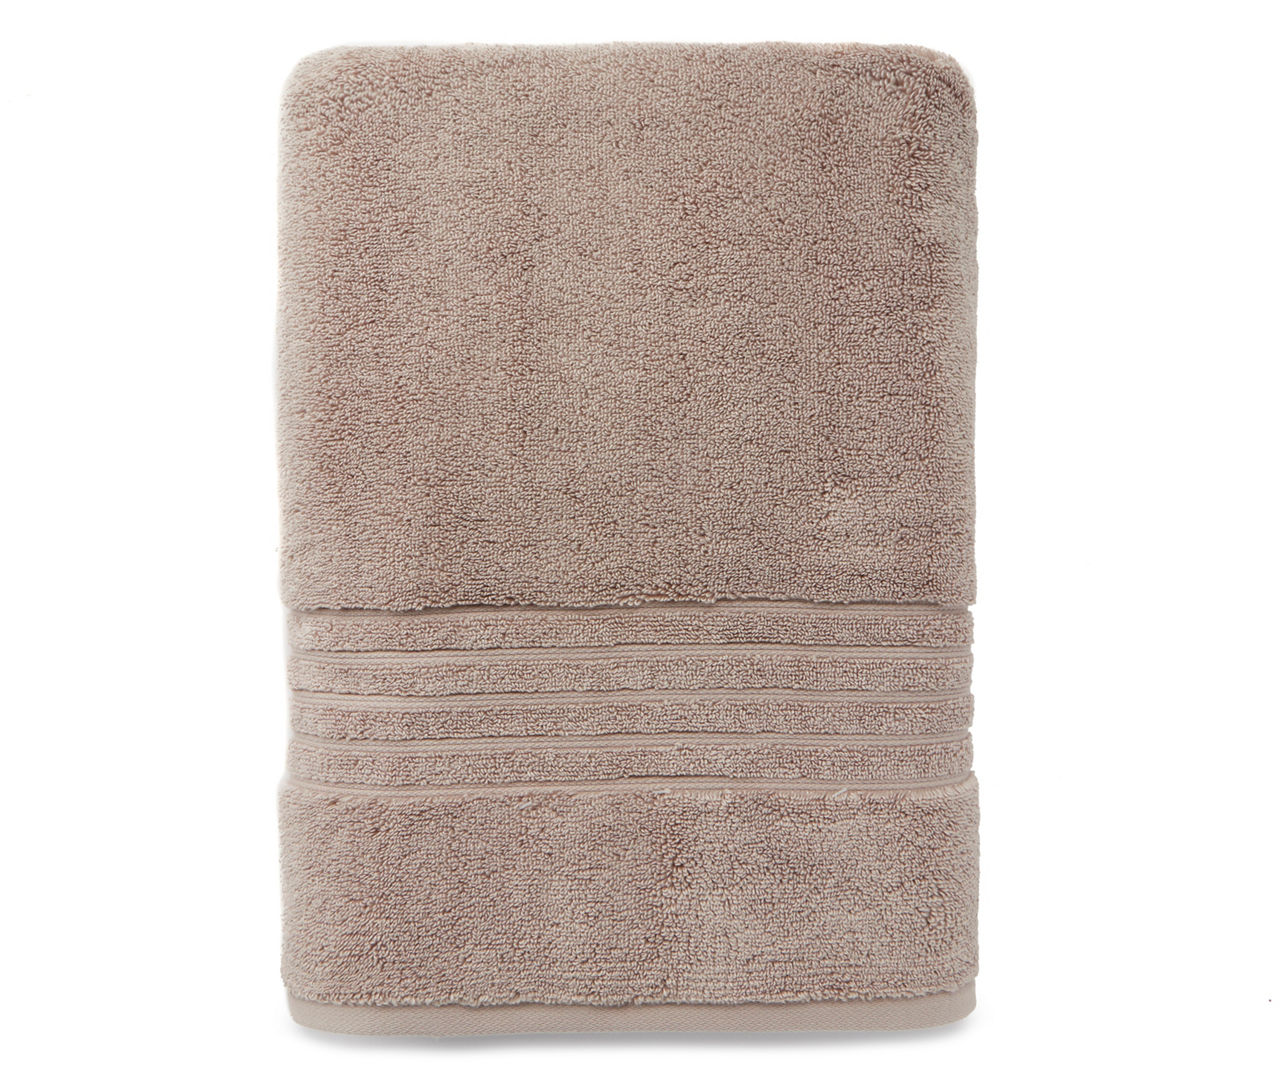 Warm Gray Egyptian Cotton Bath Towel